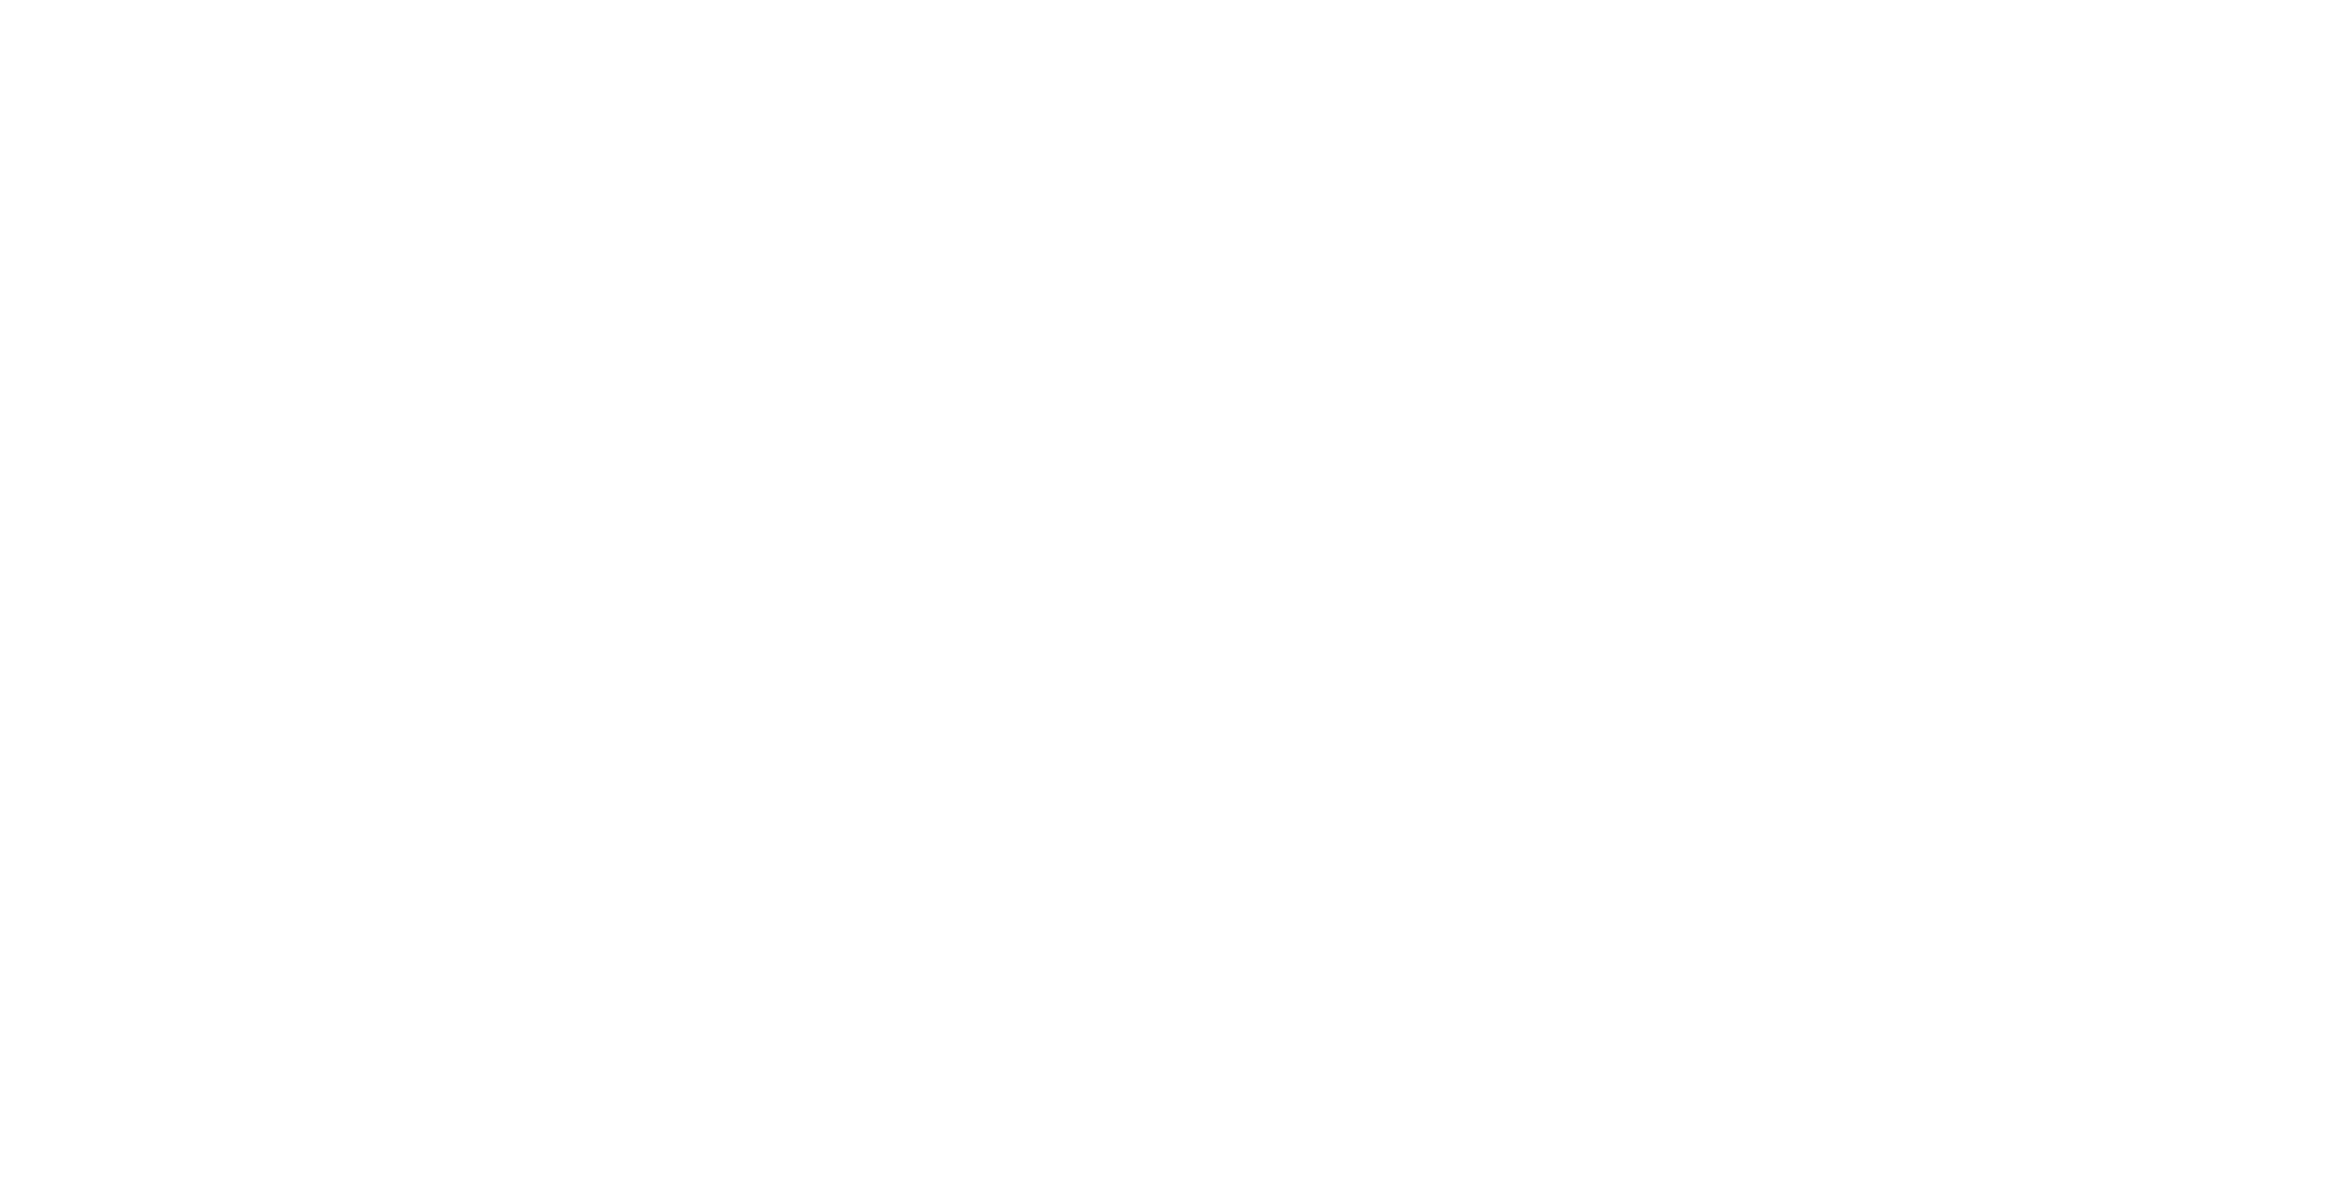 Network Communications